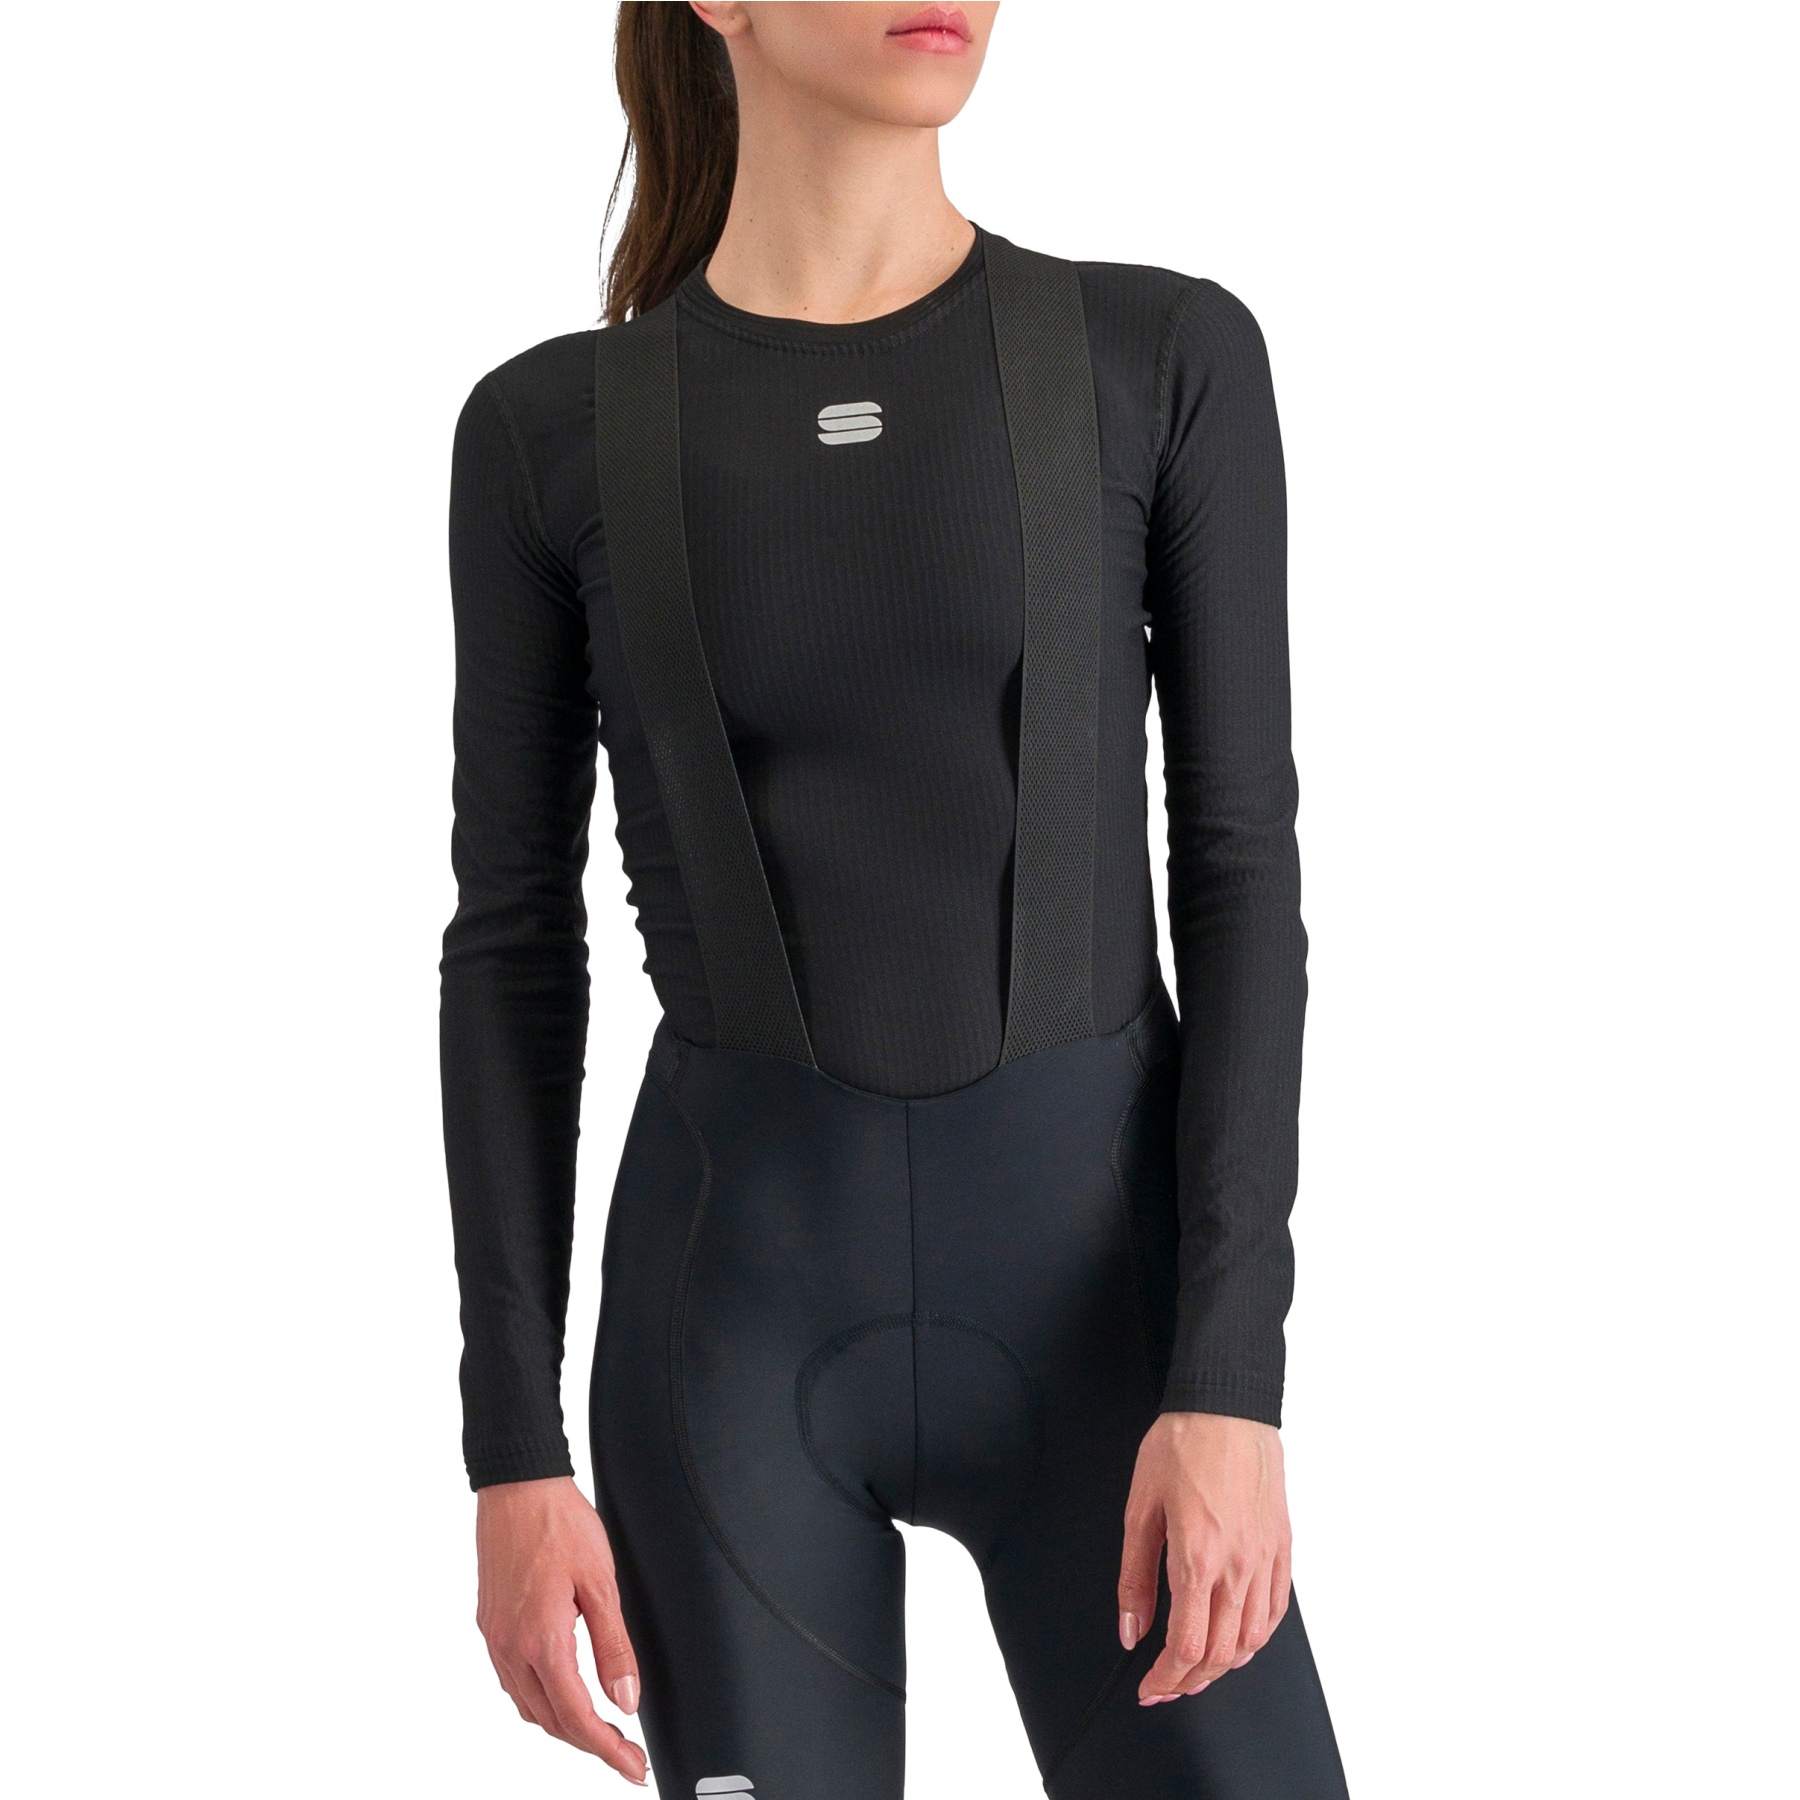 Productfoto van Sportful Bodyfit Pro Hemd met Lange Mouwen Dames - 002 Black